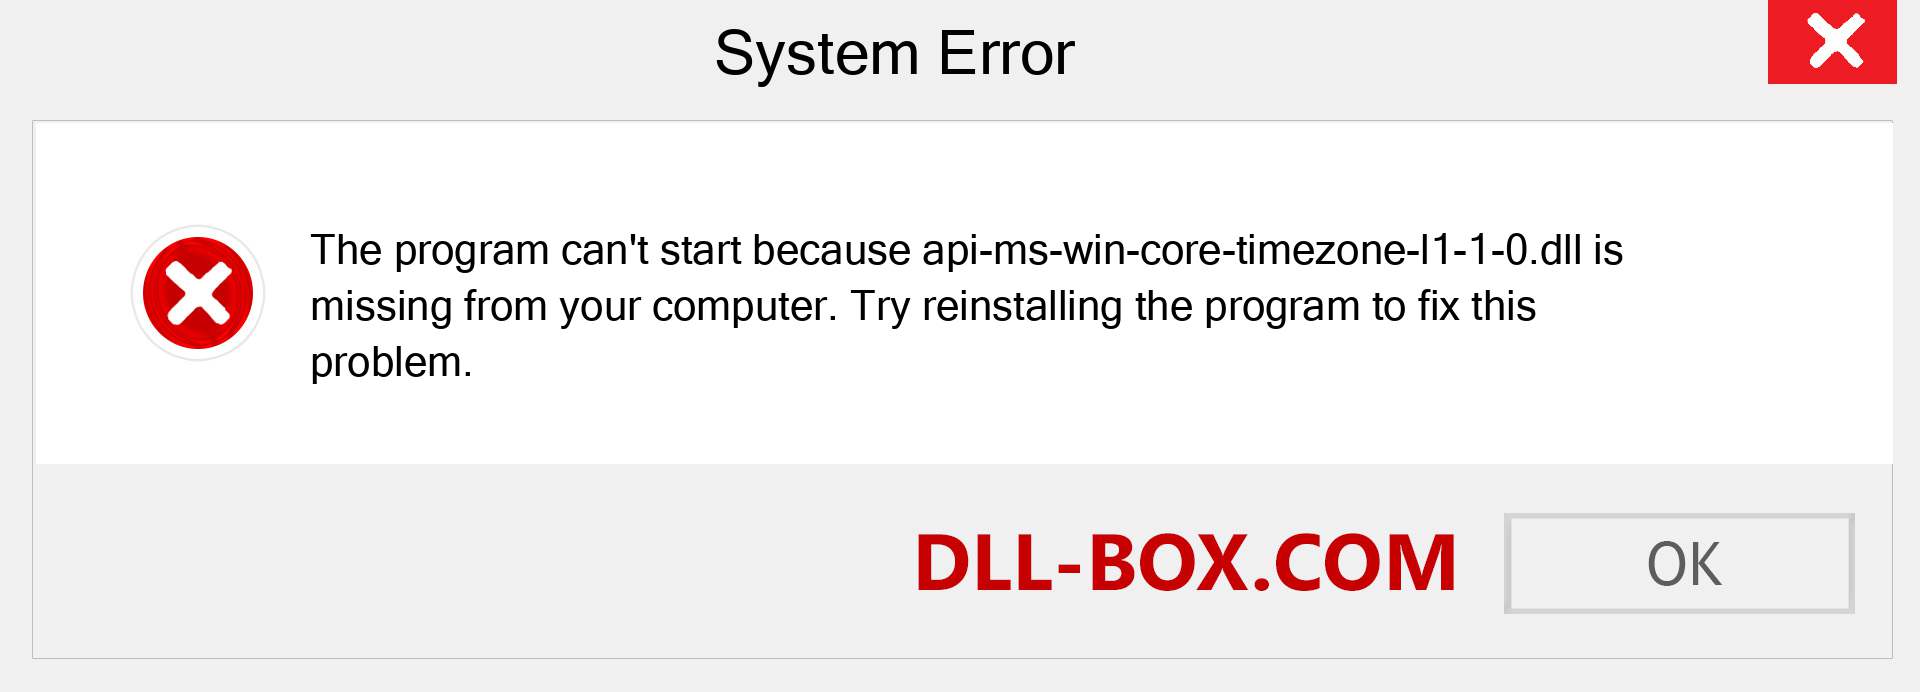  api-ms-win-core-timezone-l1-1-0.dll file is missing?. Download for Windows 7, 8, 10 - Fix  api-ms-win-core-timezone-l1-1-0 dll Missing Error on Windows, photos, images